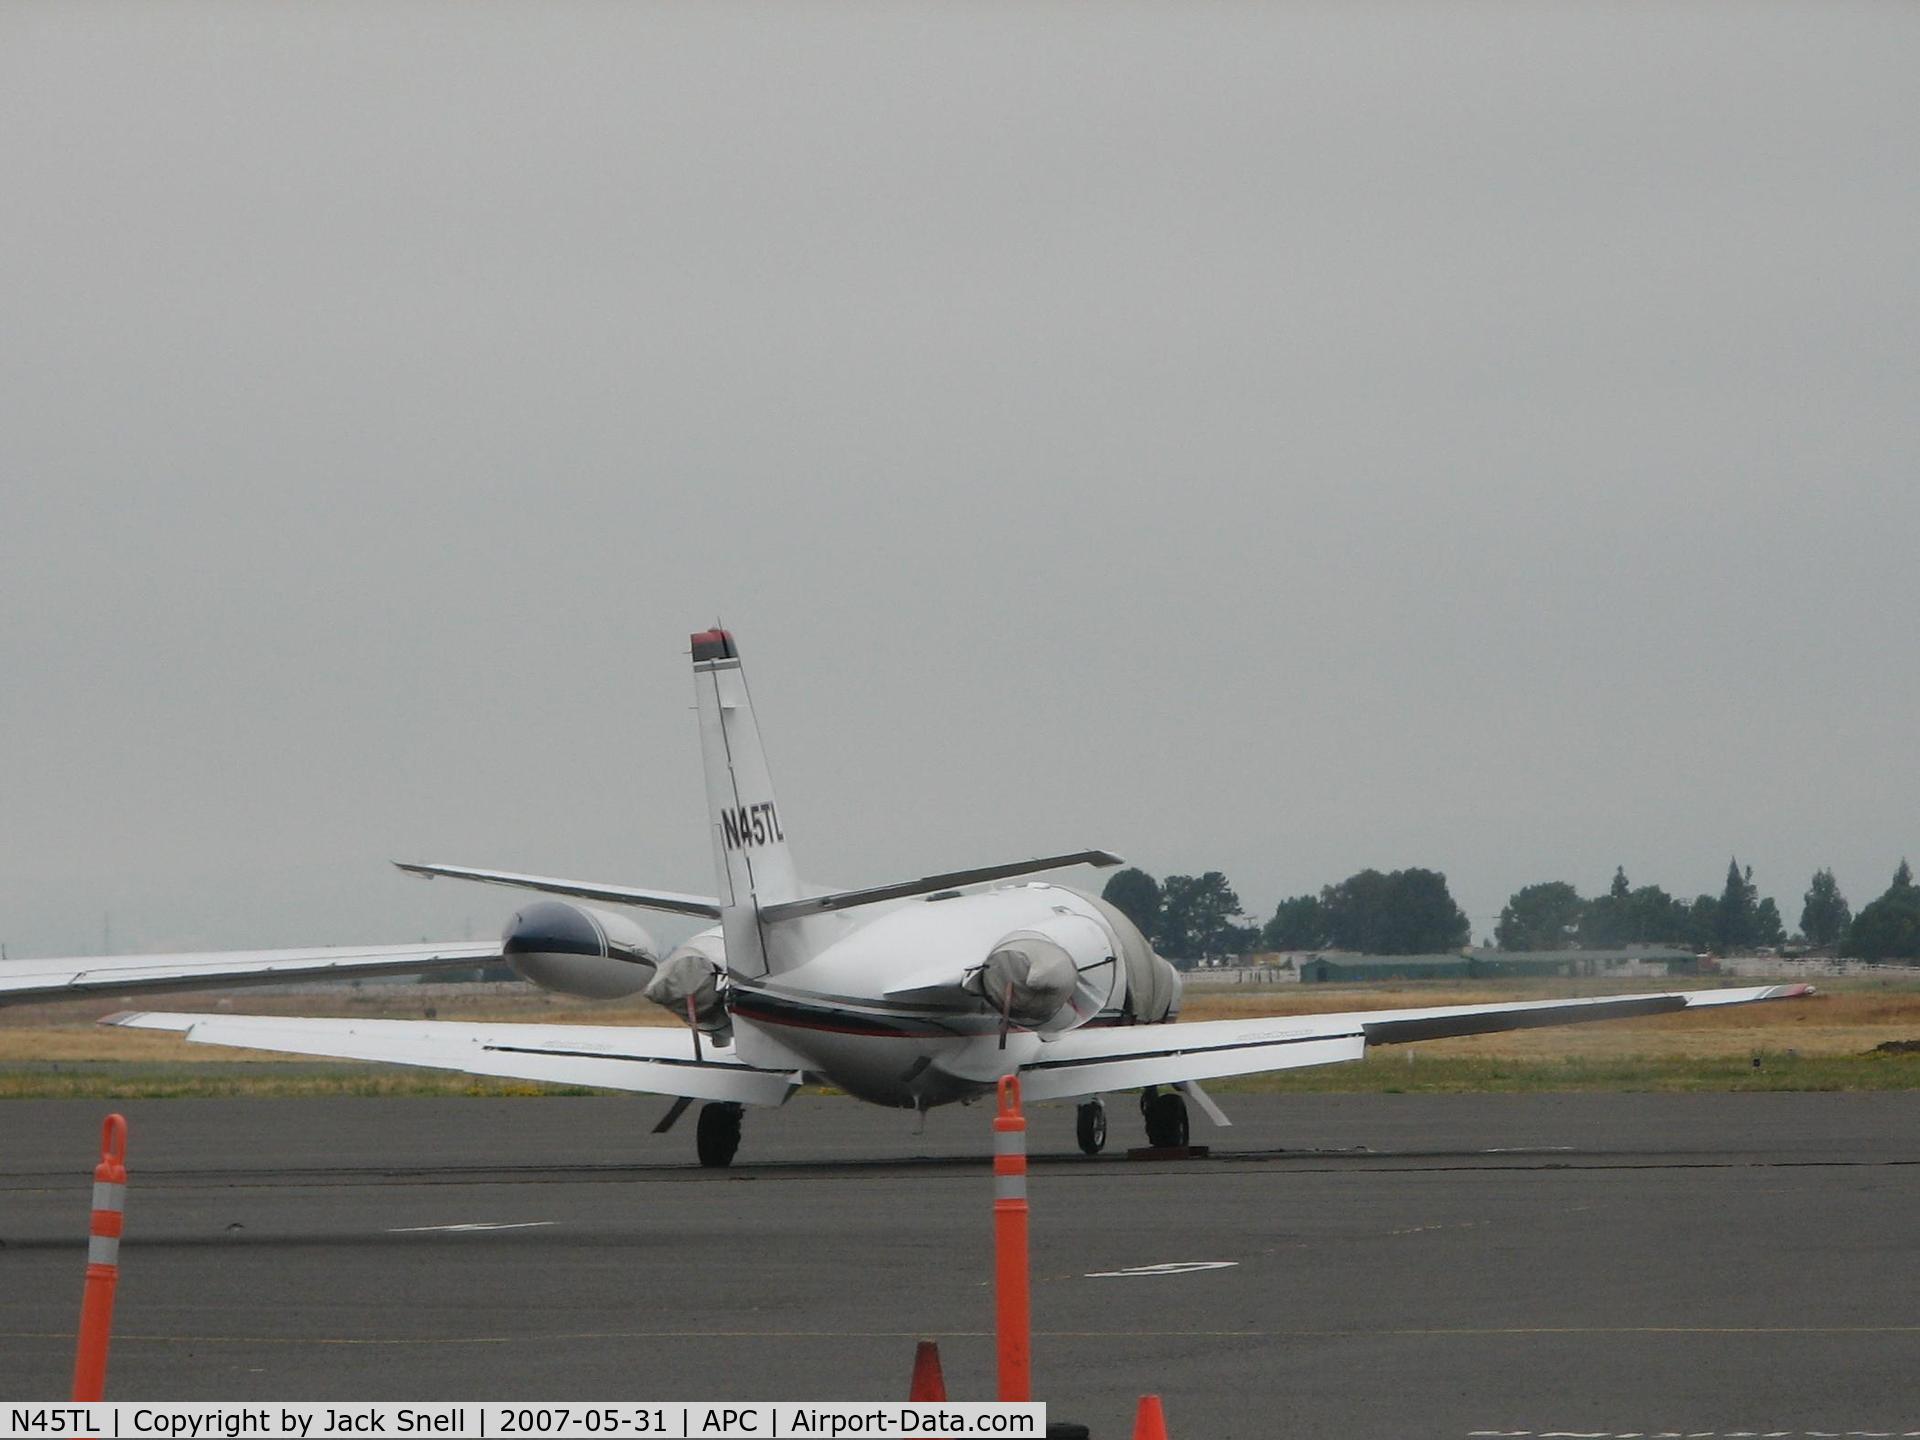 N45TL, 1977 Cessna 501 Citation I/SP C/N 501-0016, Taken at the Nspa Cpunty Airport, Napa, CA.